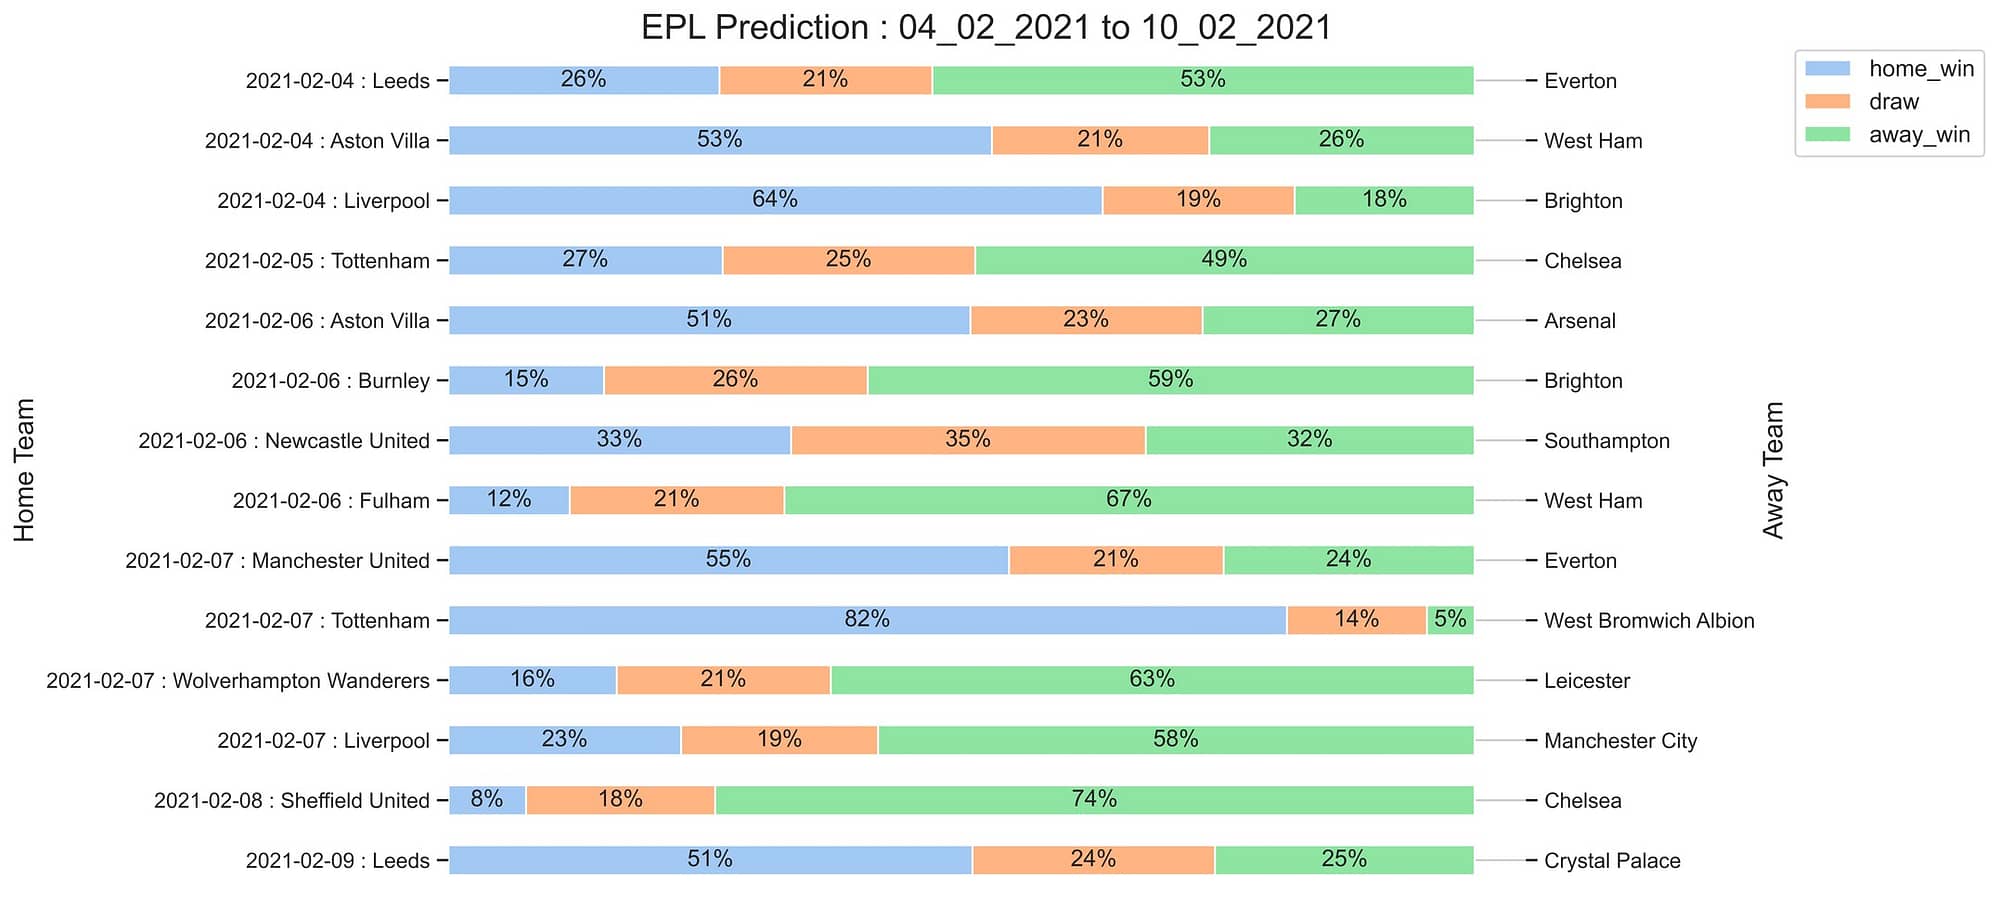 EPL_Prediction 04_02_2021